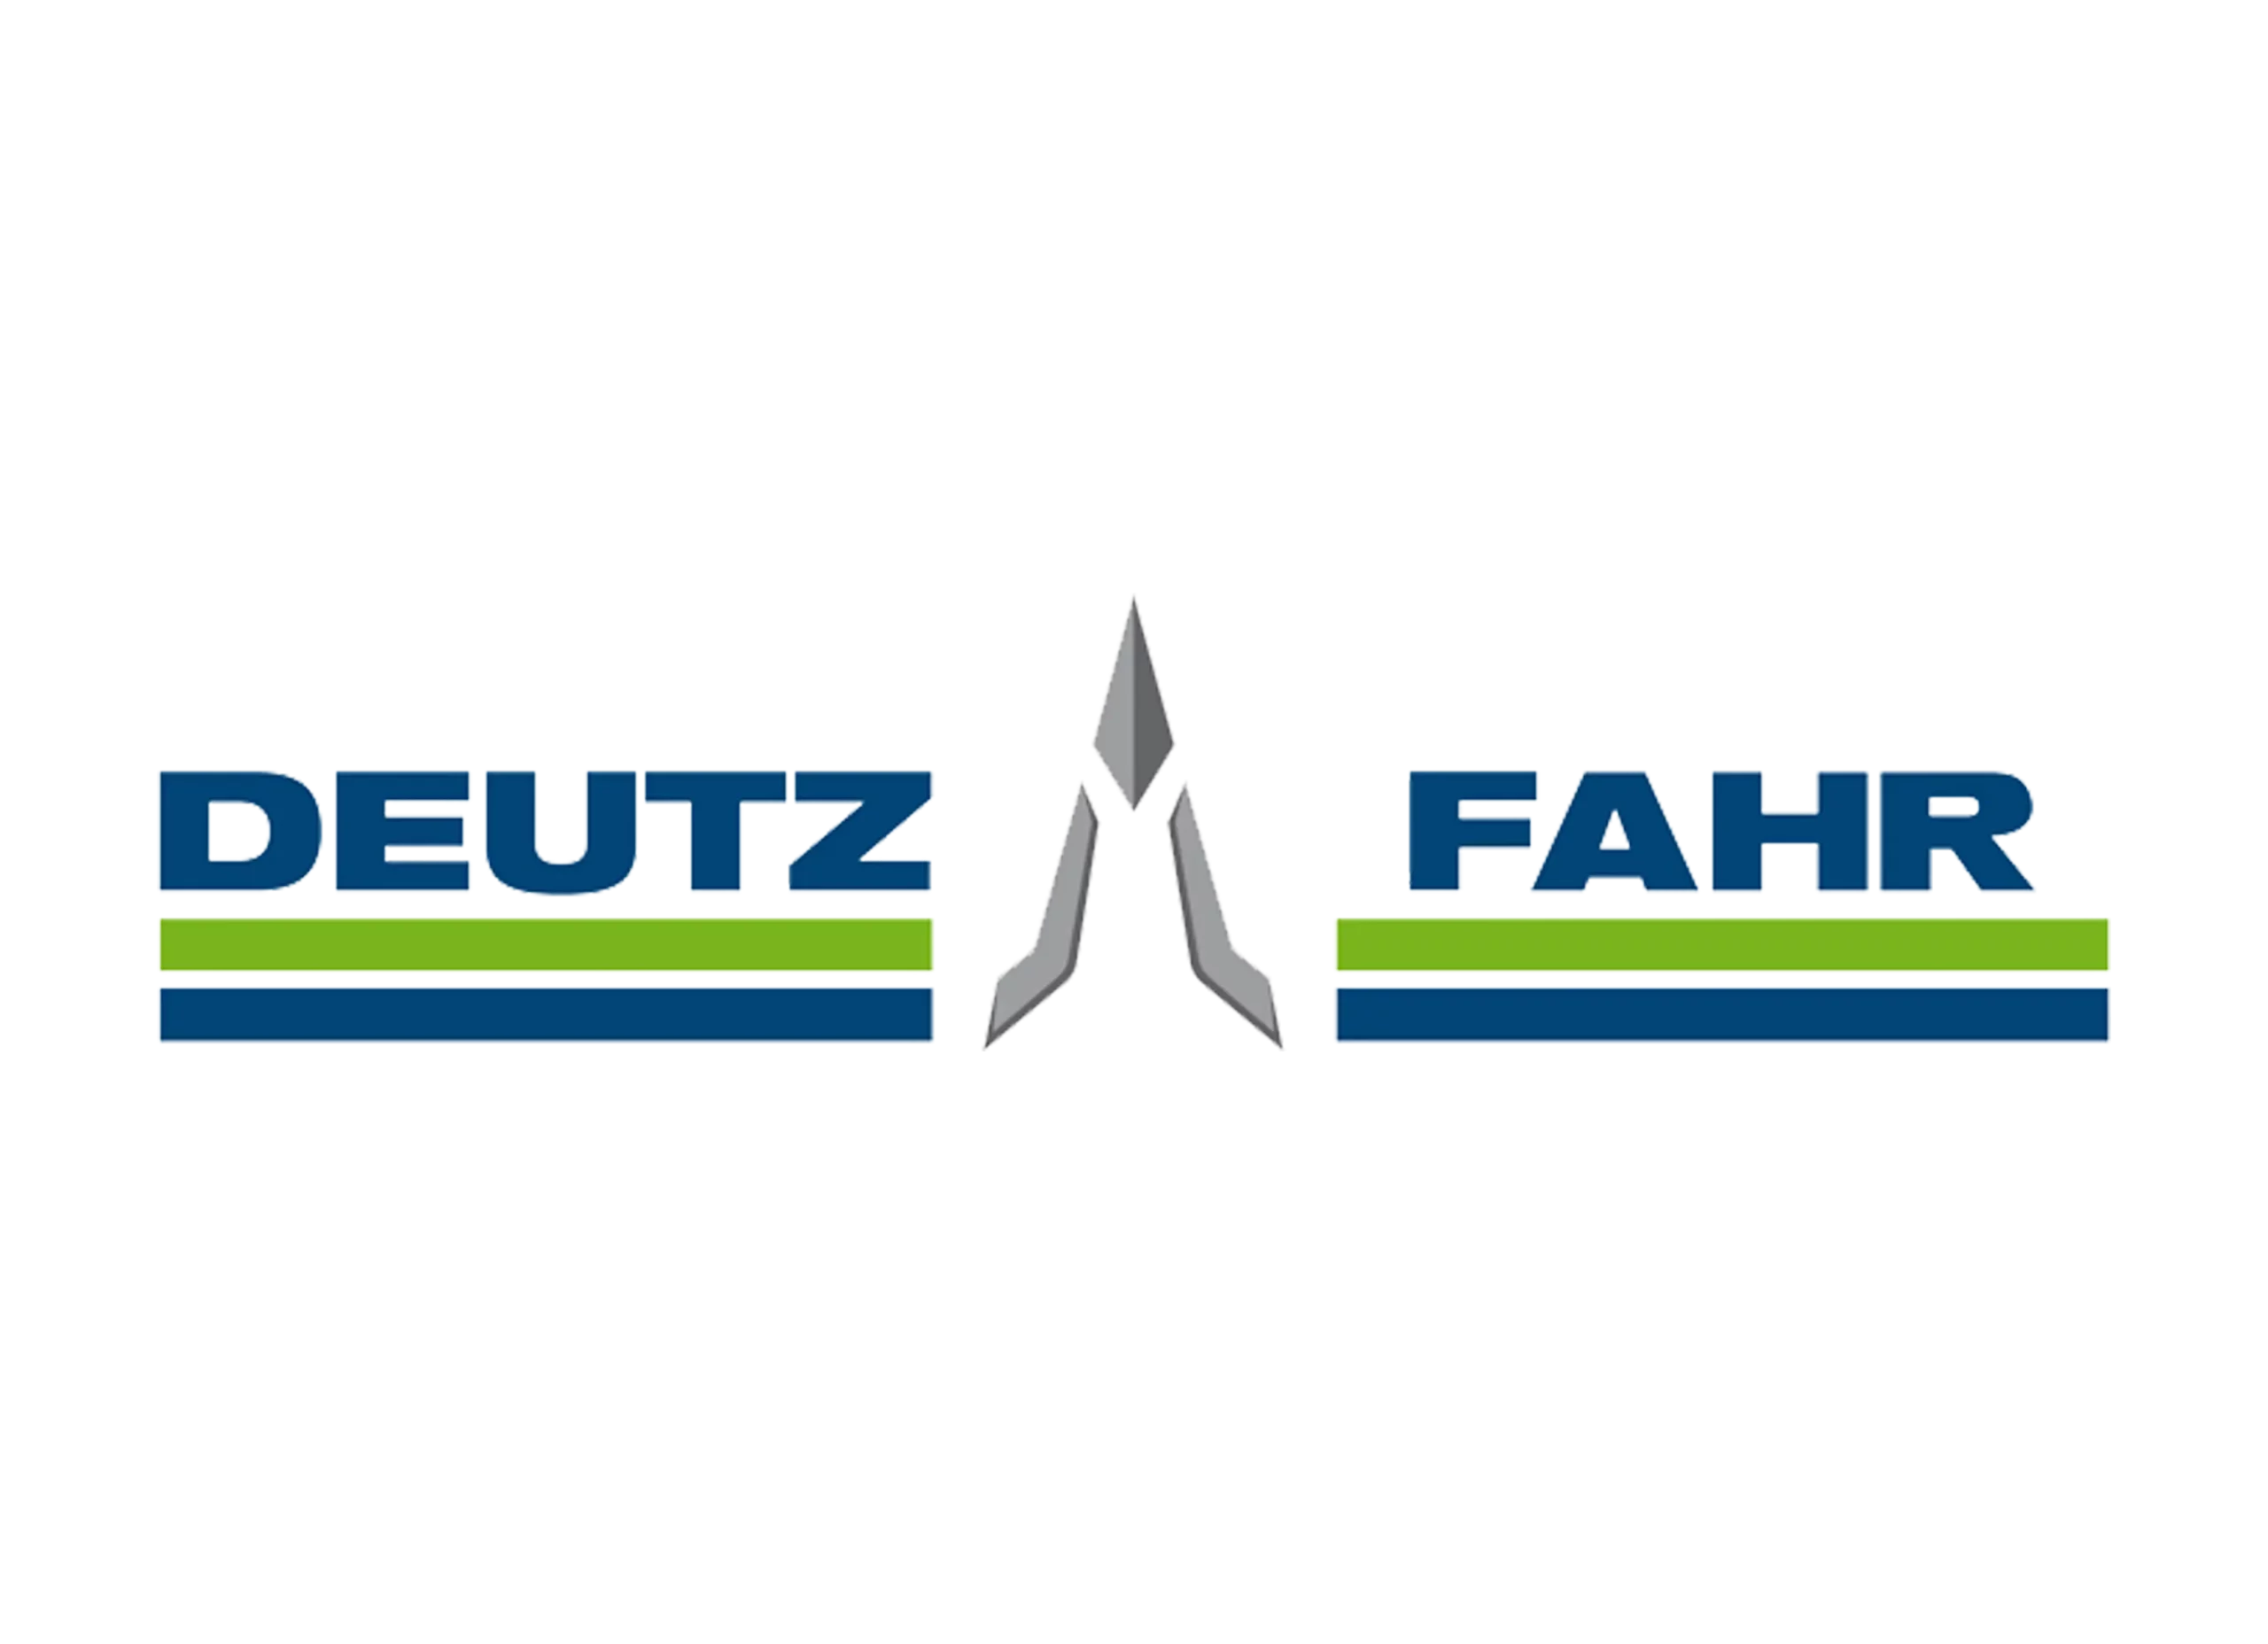 Deutz Fahr logo present